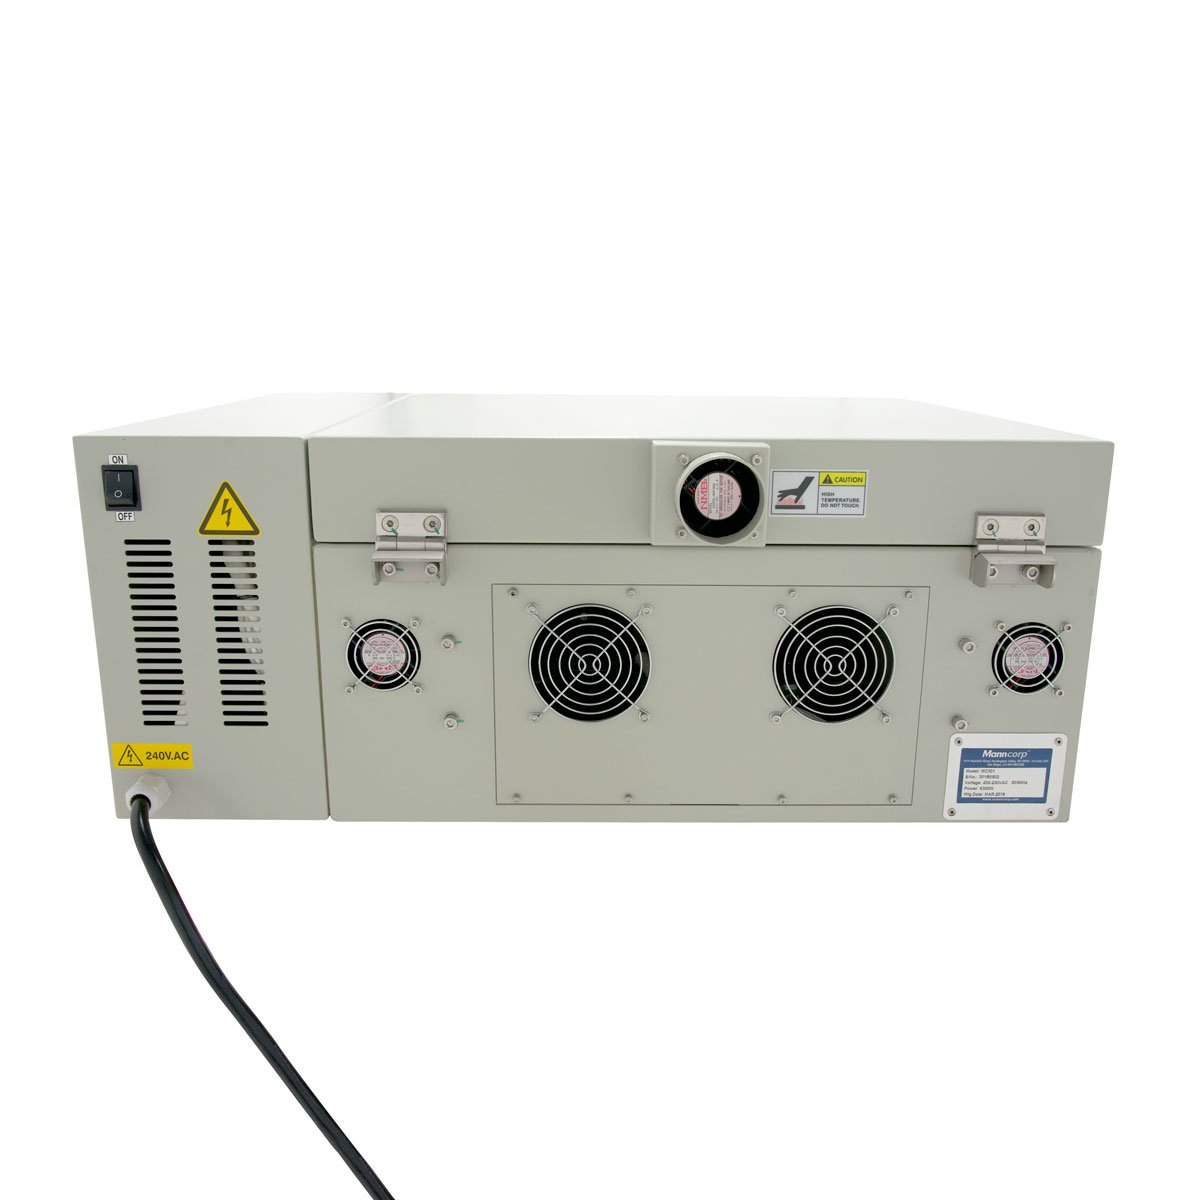 Customized Split Unit SMT Reflow Soldering Oven from China manufacturer -  I.C.T SMT Machine